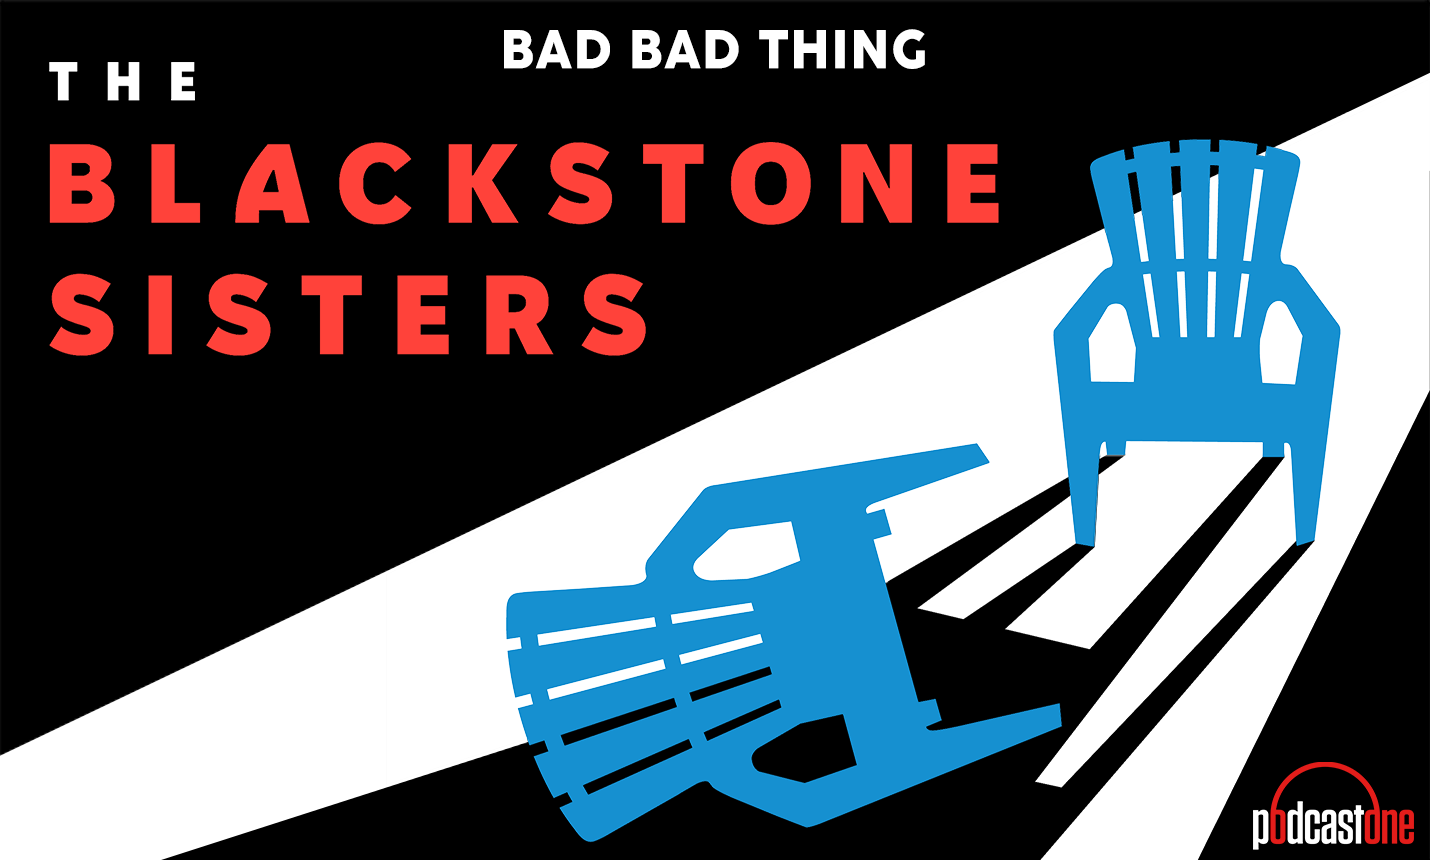 Bad Bad Thing: The Blackstone Sisters